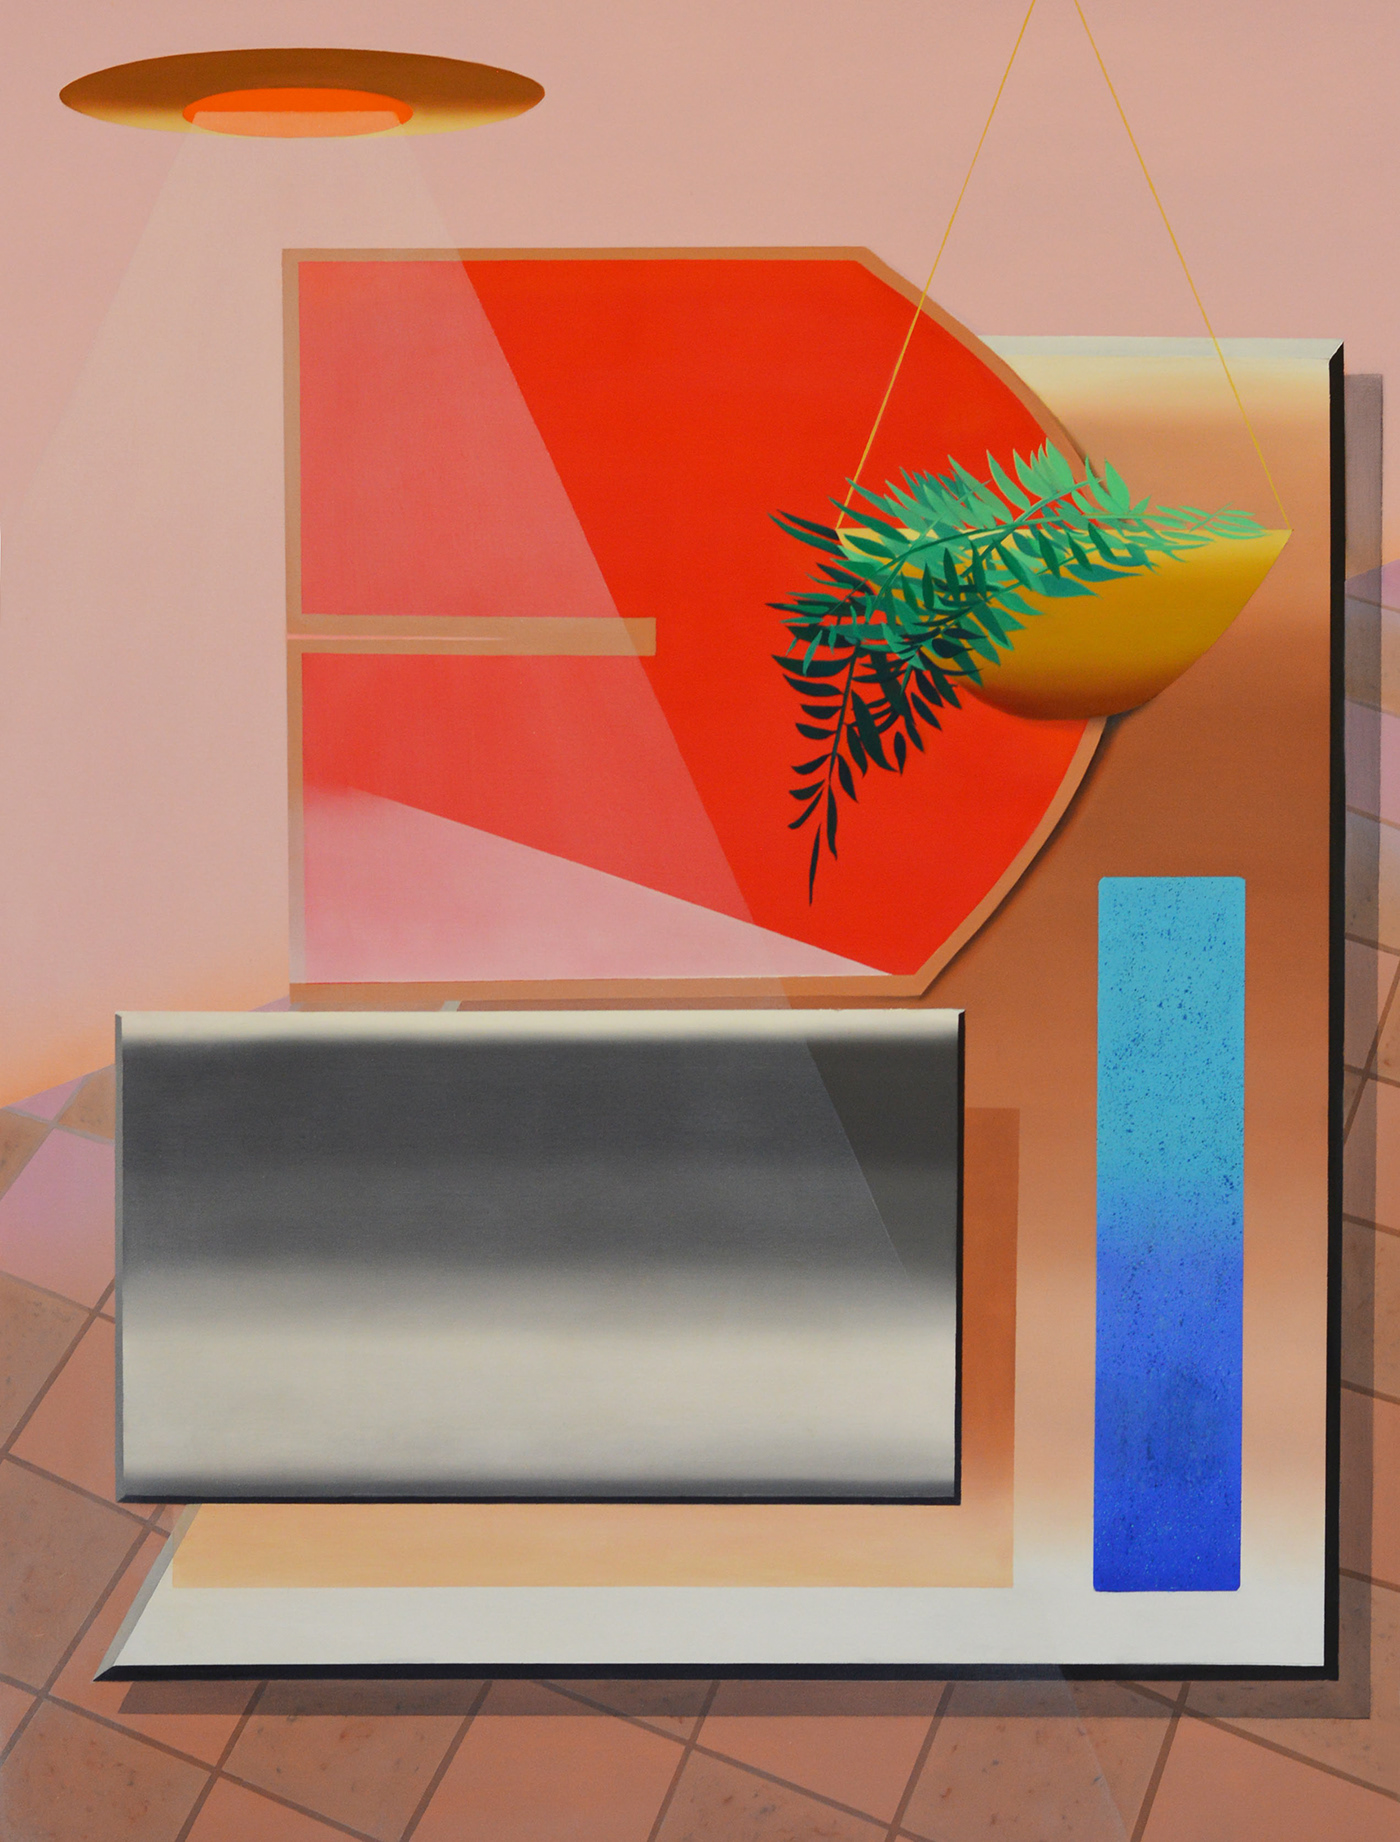 Oil Painting contemporarypainting postdigital design painting   newaesthetic aesthetic mall hauntology gradient